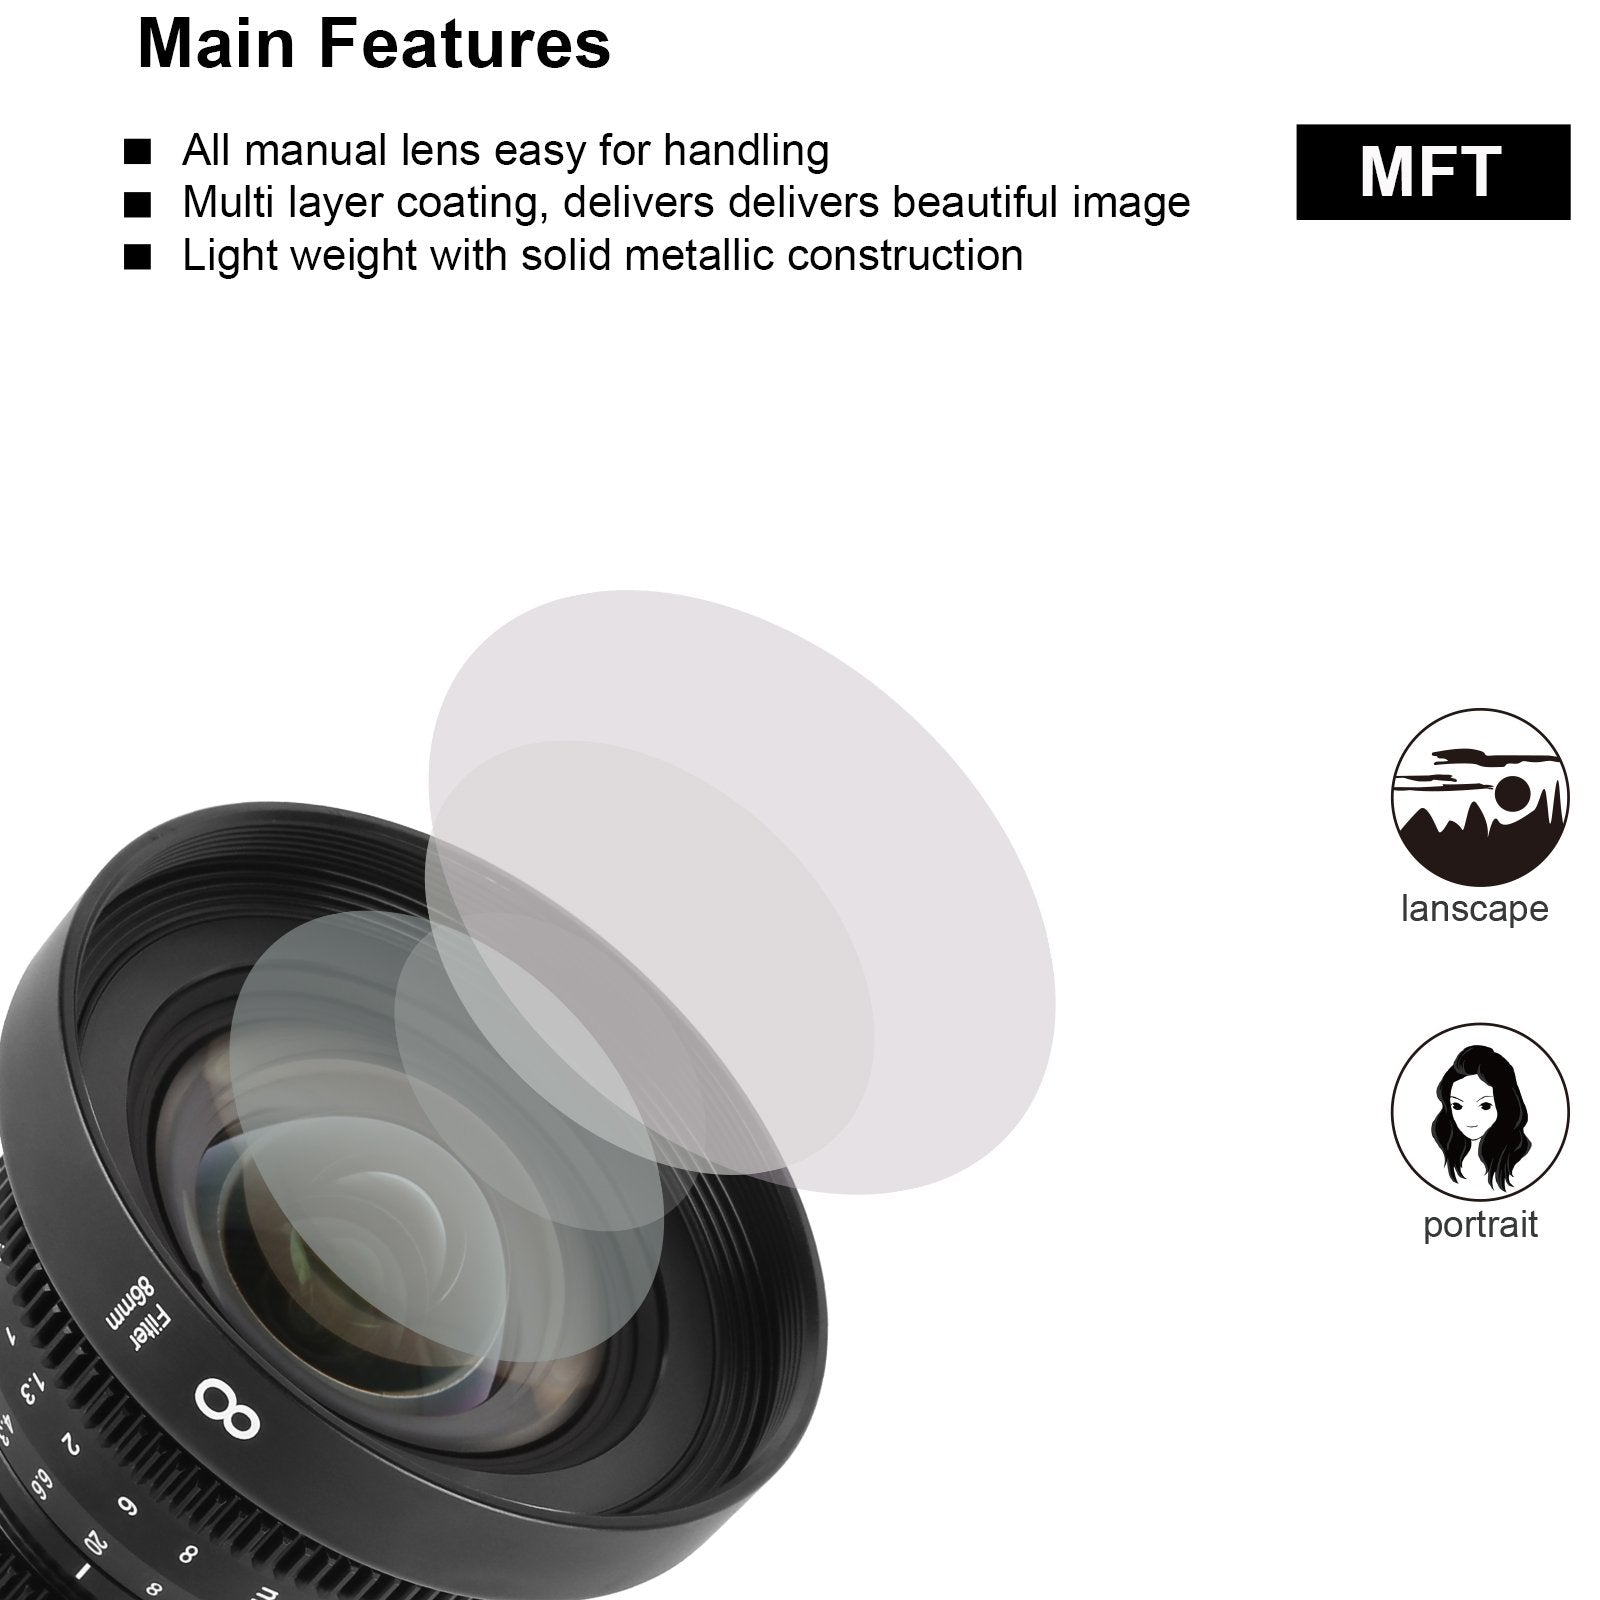 Meike Cinema 8mm T2.9 Micro4/3 Lens (MFT Mount) Key Features